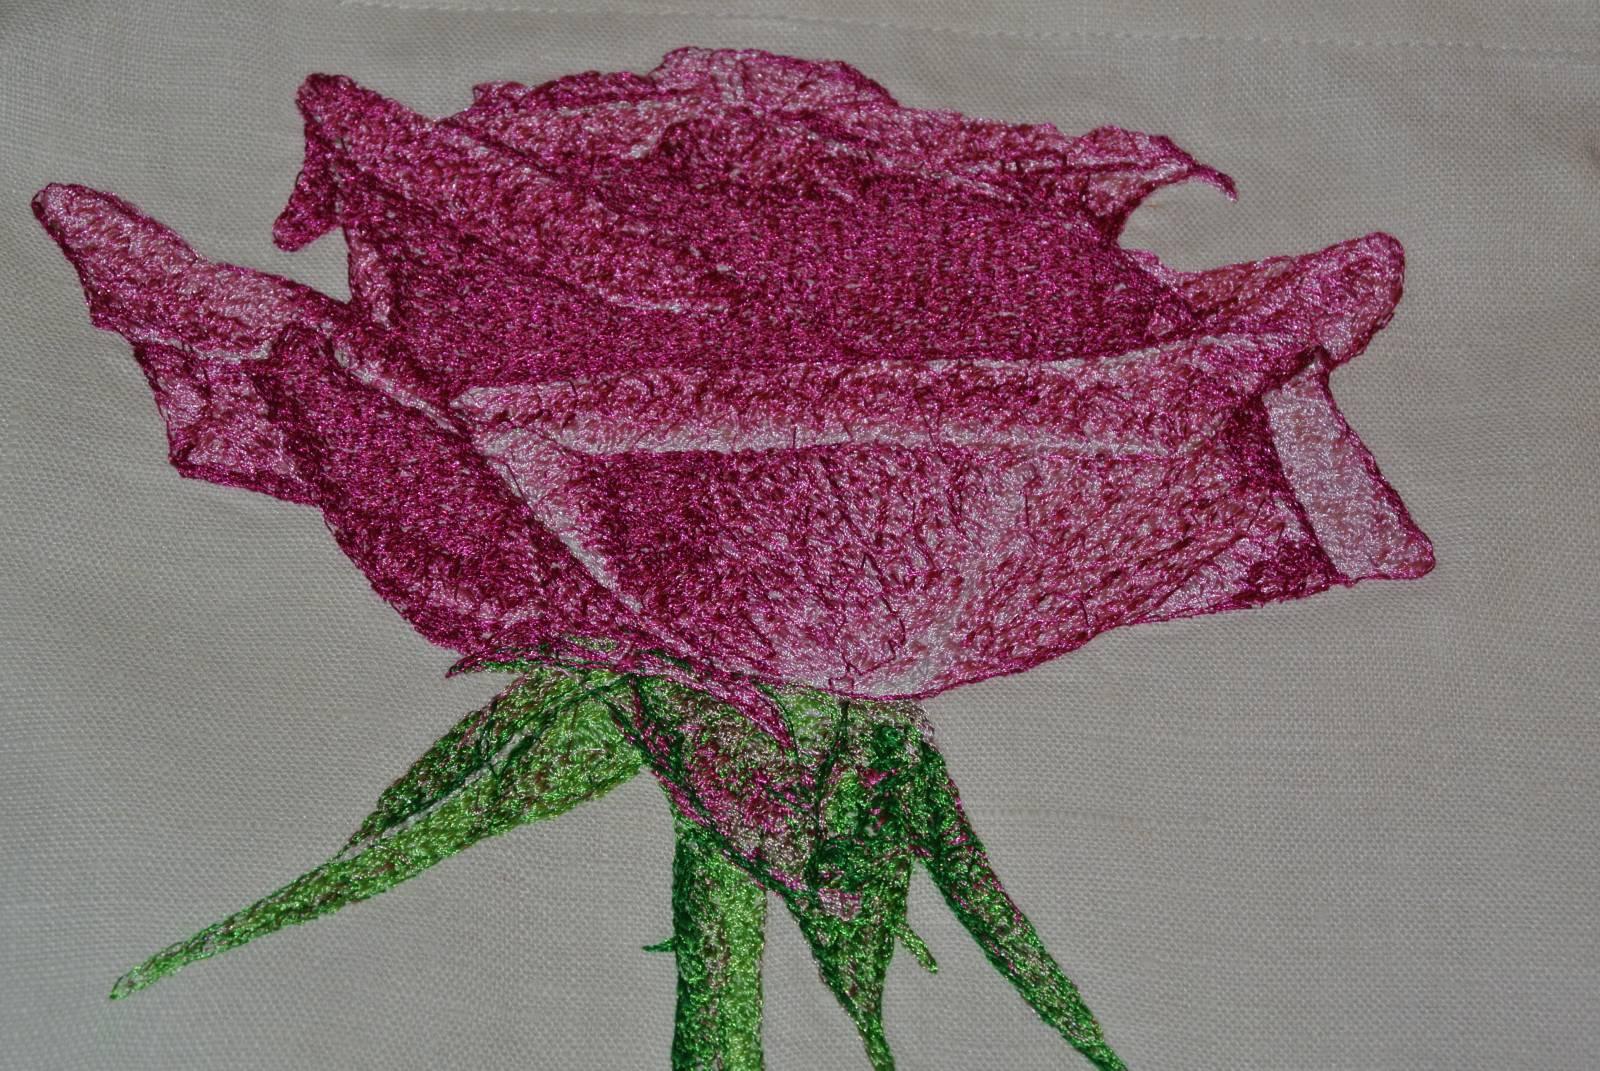 Rose photo stitch free embroidery